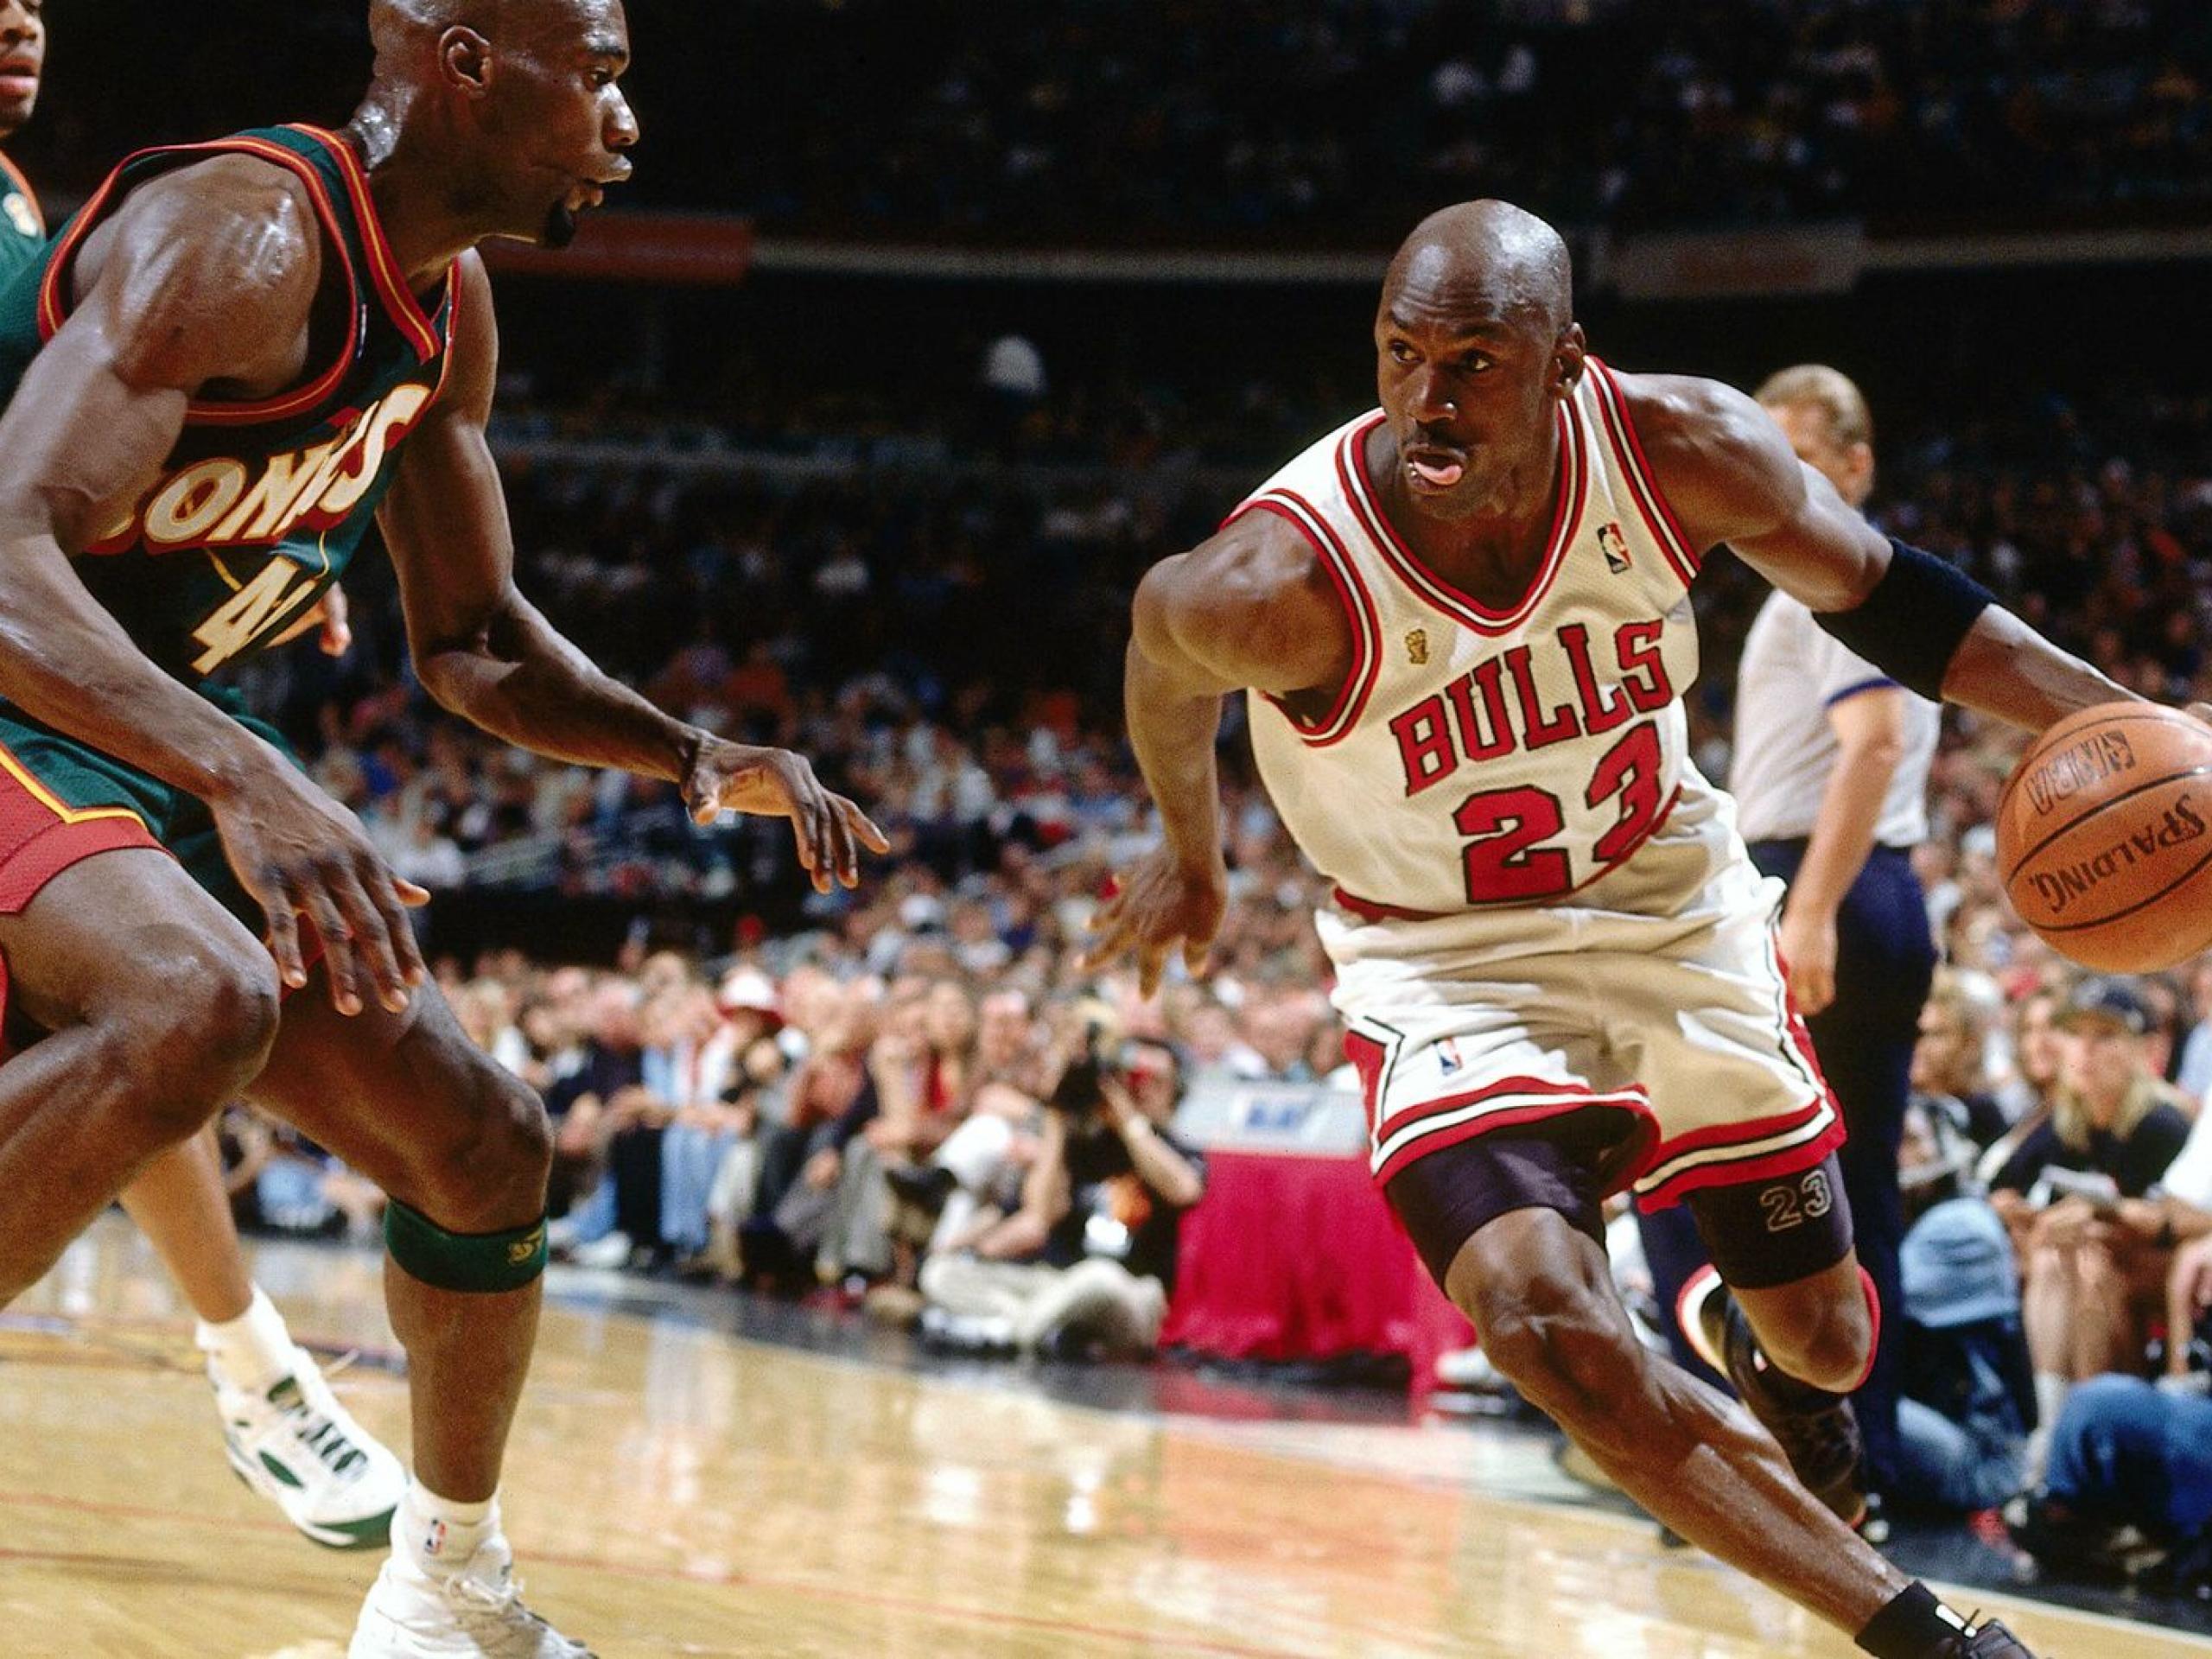 Michael Jordan Wallpaper , HD Wallpaper & Backgrounds